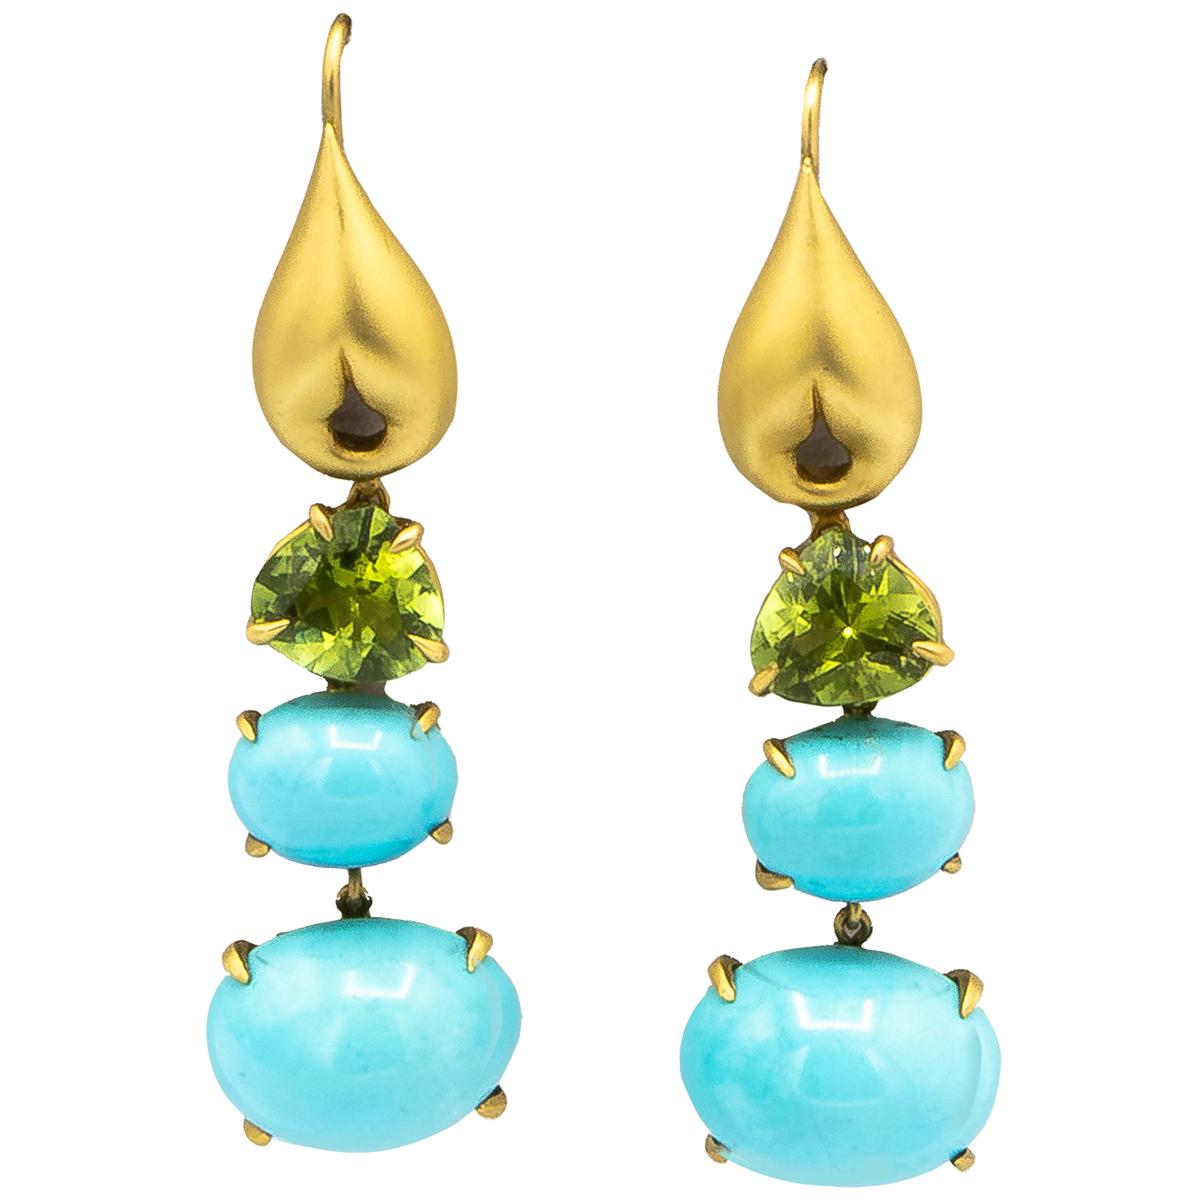 Donald Huber 6 Carat Persian Turquoise and Peridot Earrings 18 Karat Gold